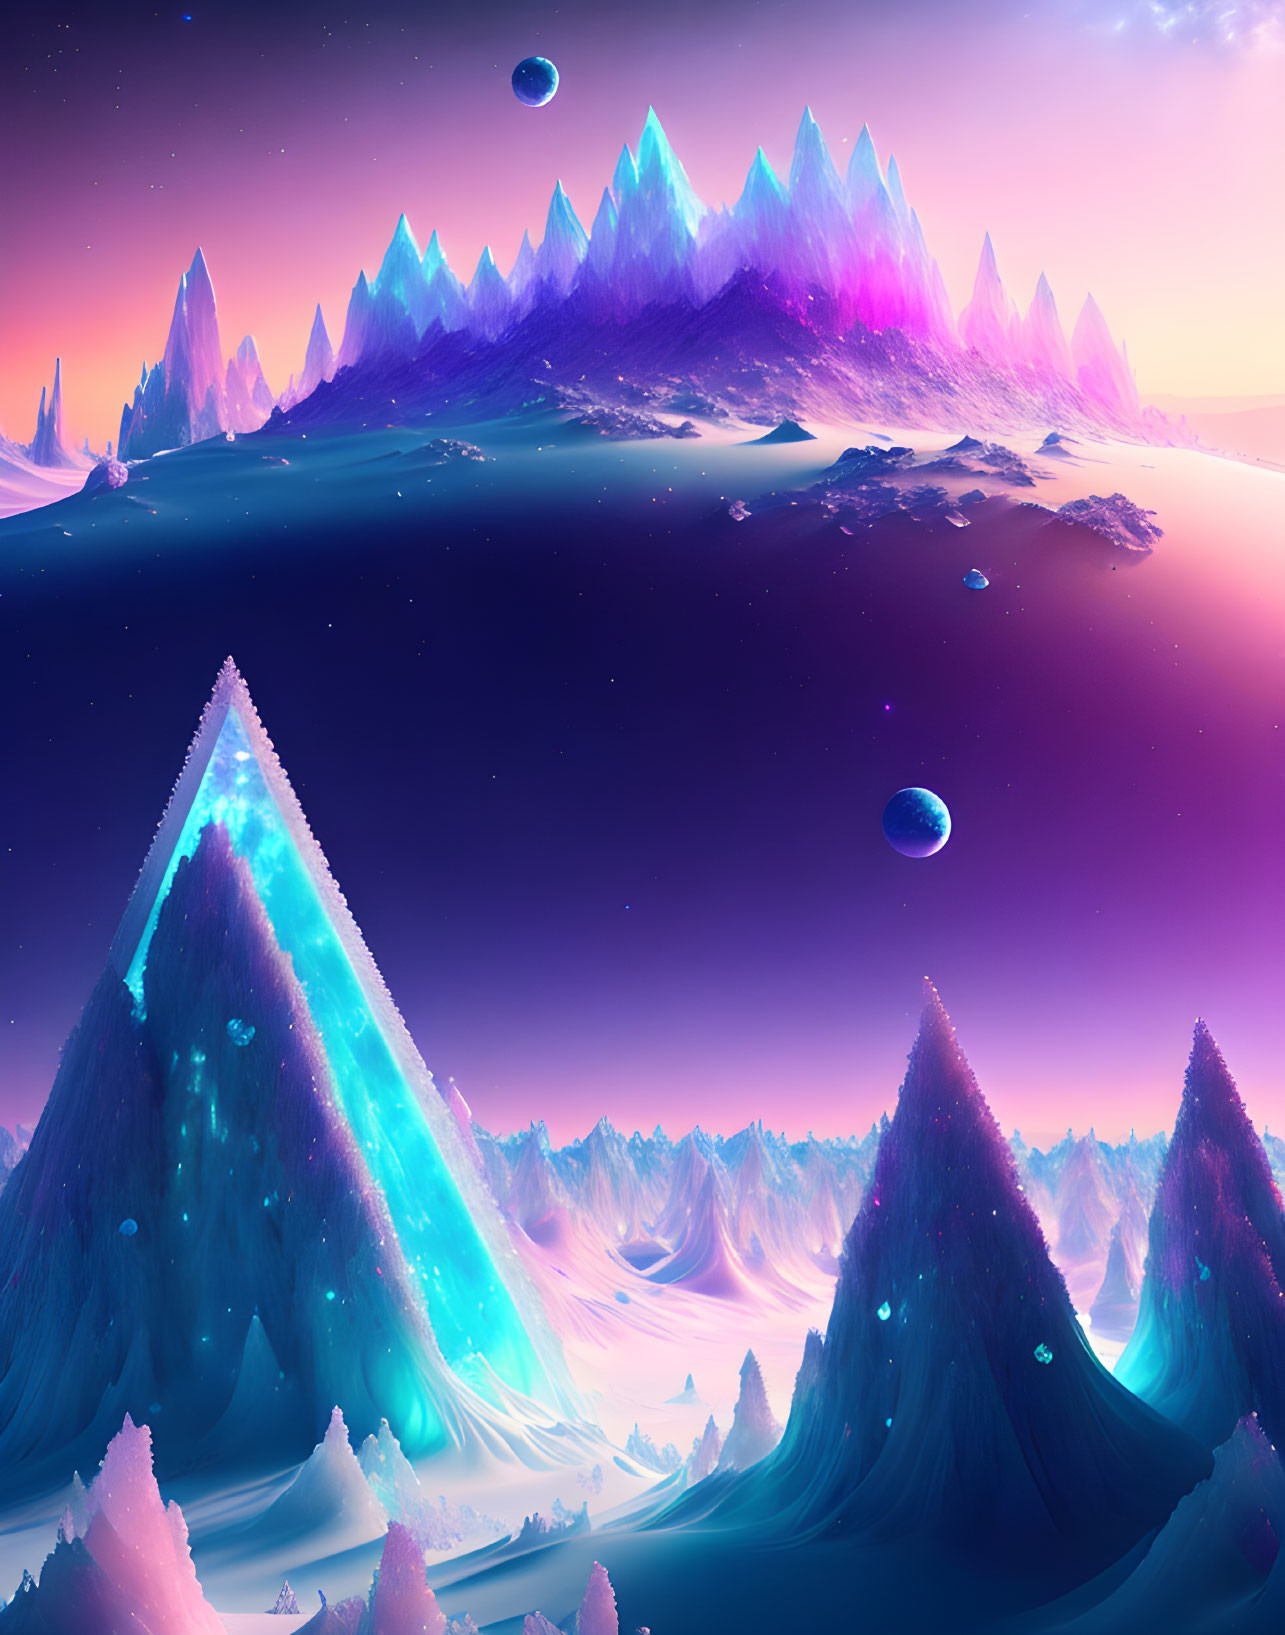 Luminous crystalline mountains in vibrant alien landscape